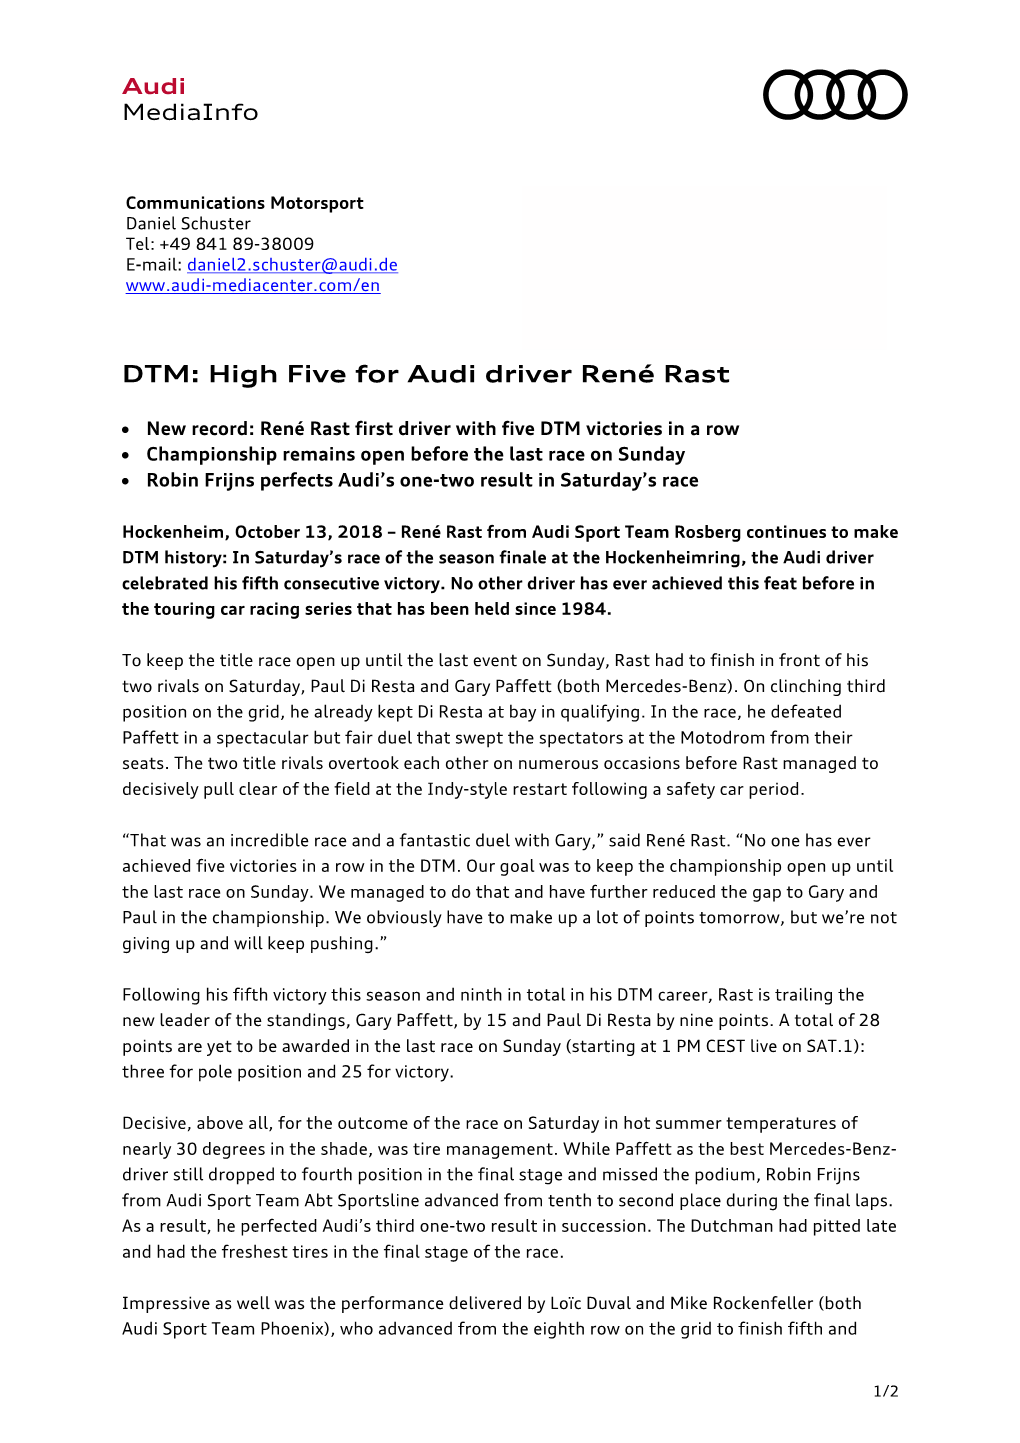 DTM: High Five for Audi Driver René Rast